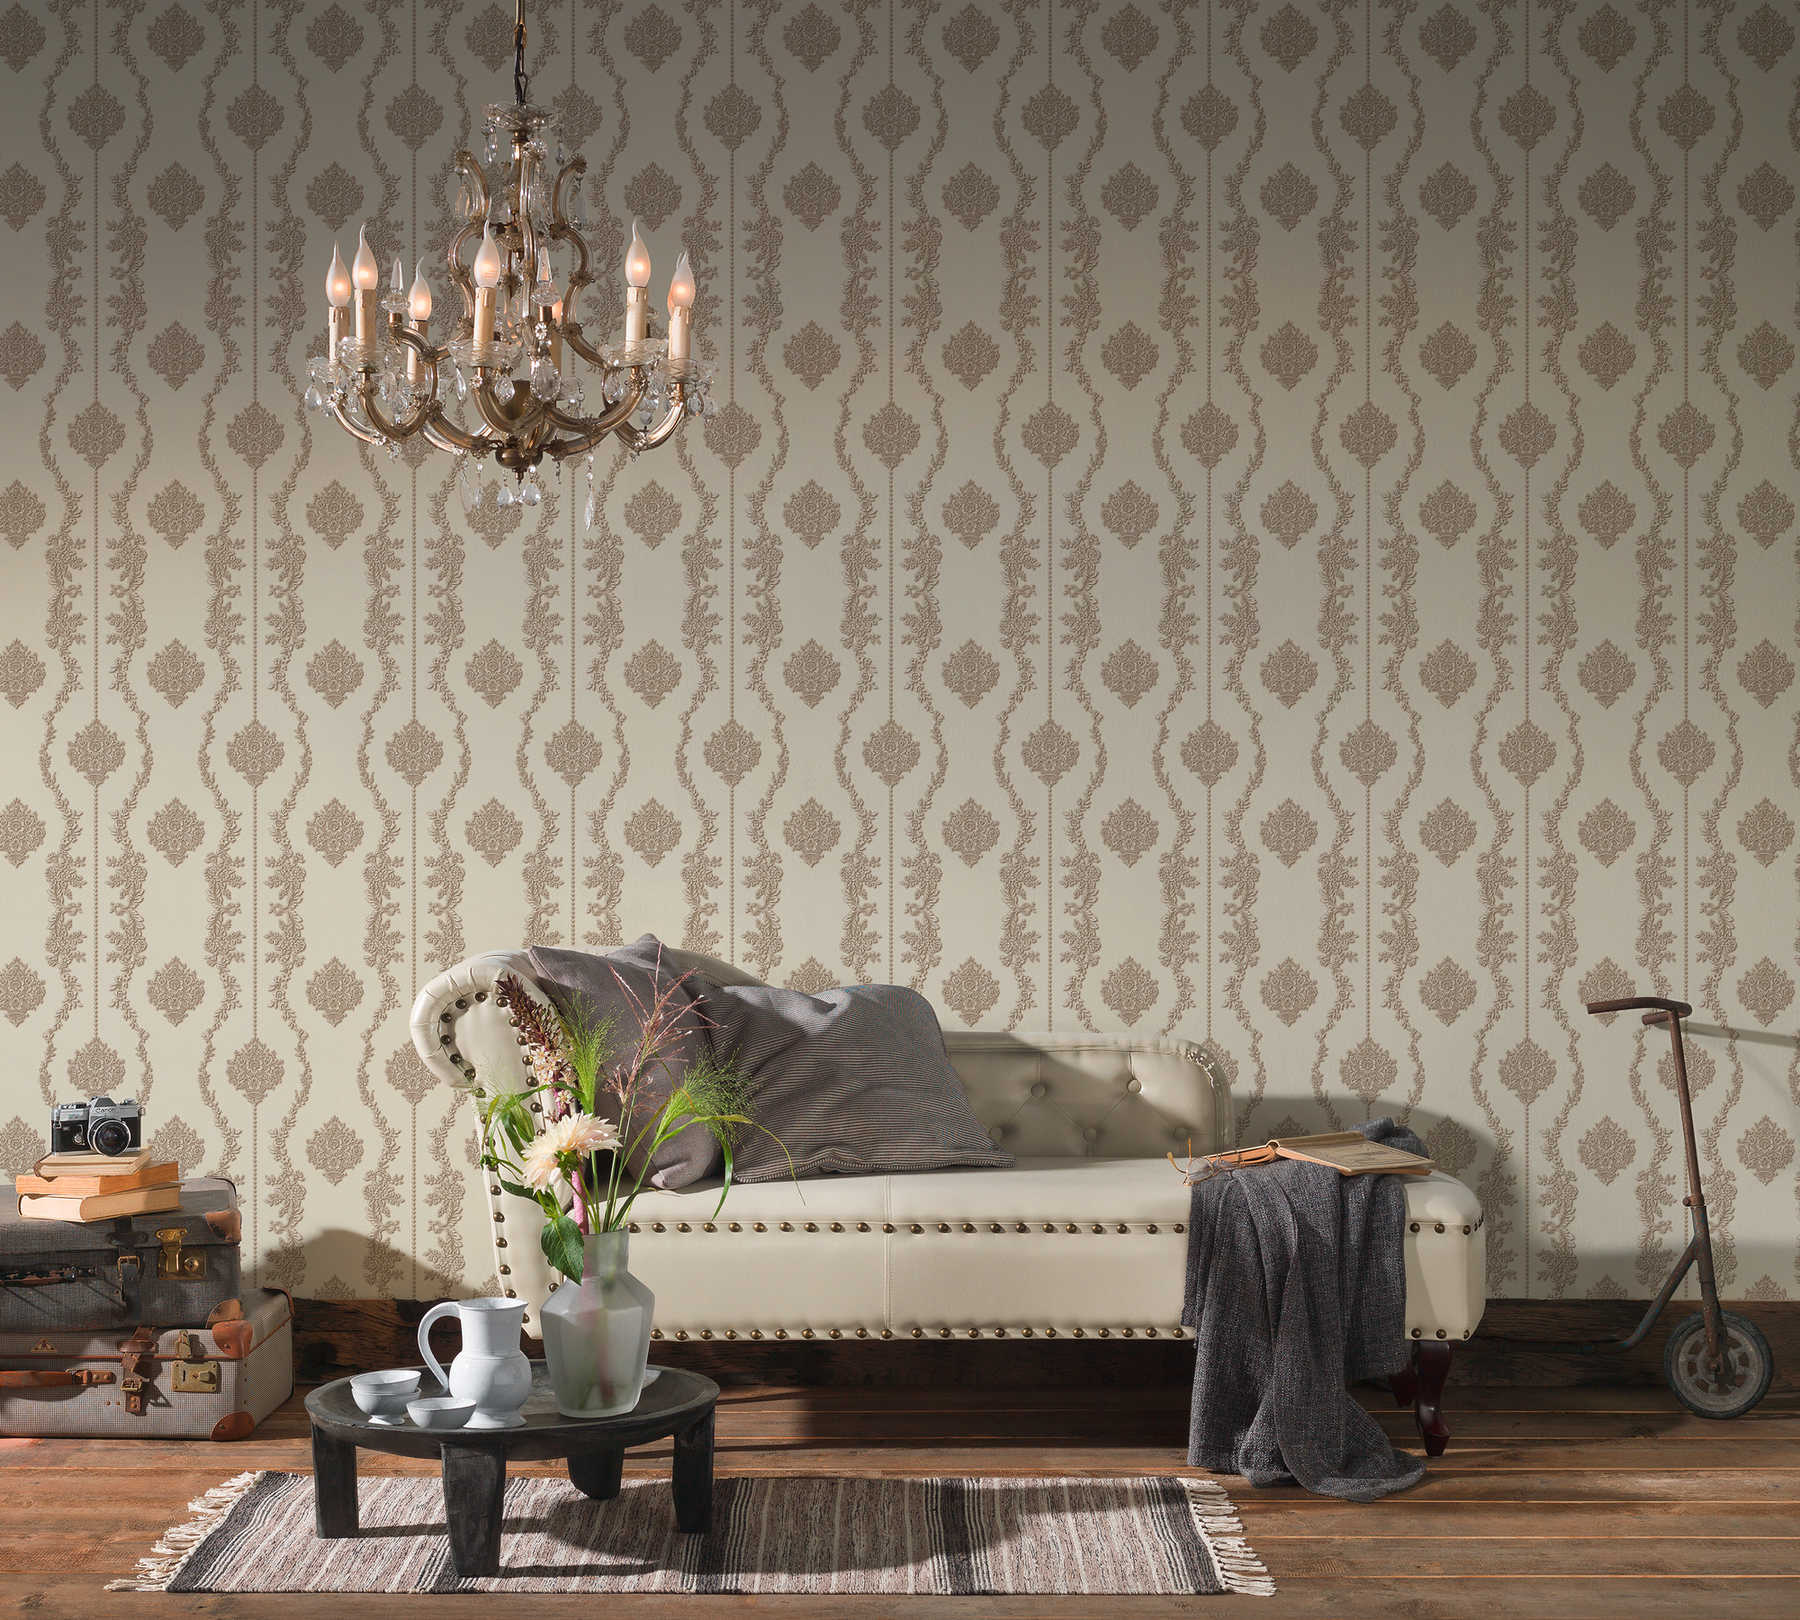             Classic decor wallpaper floral ornament pattern - beige, metallic
        